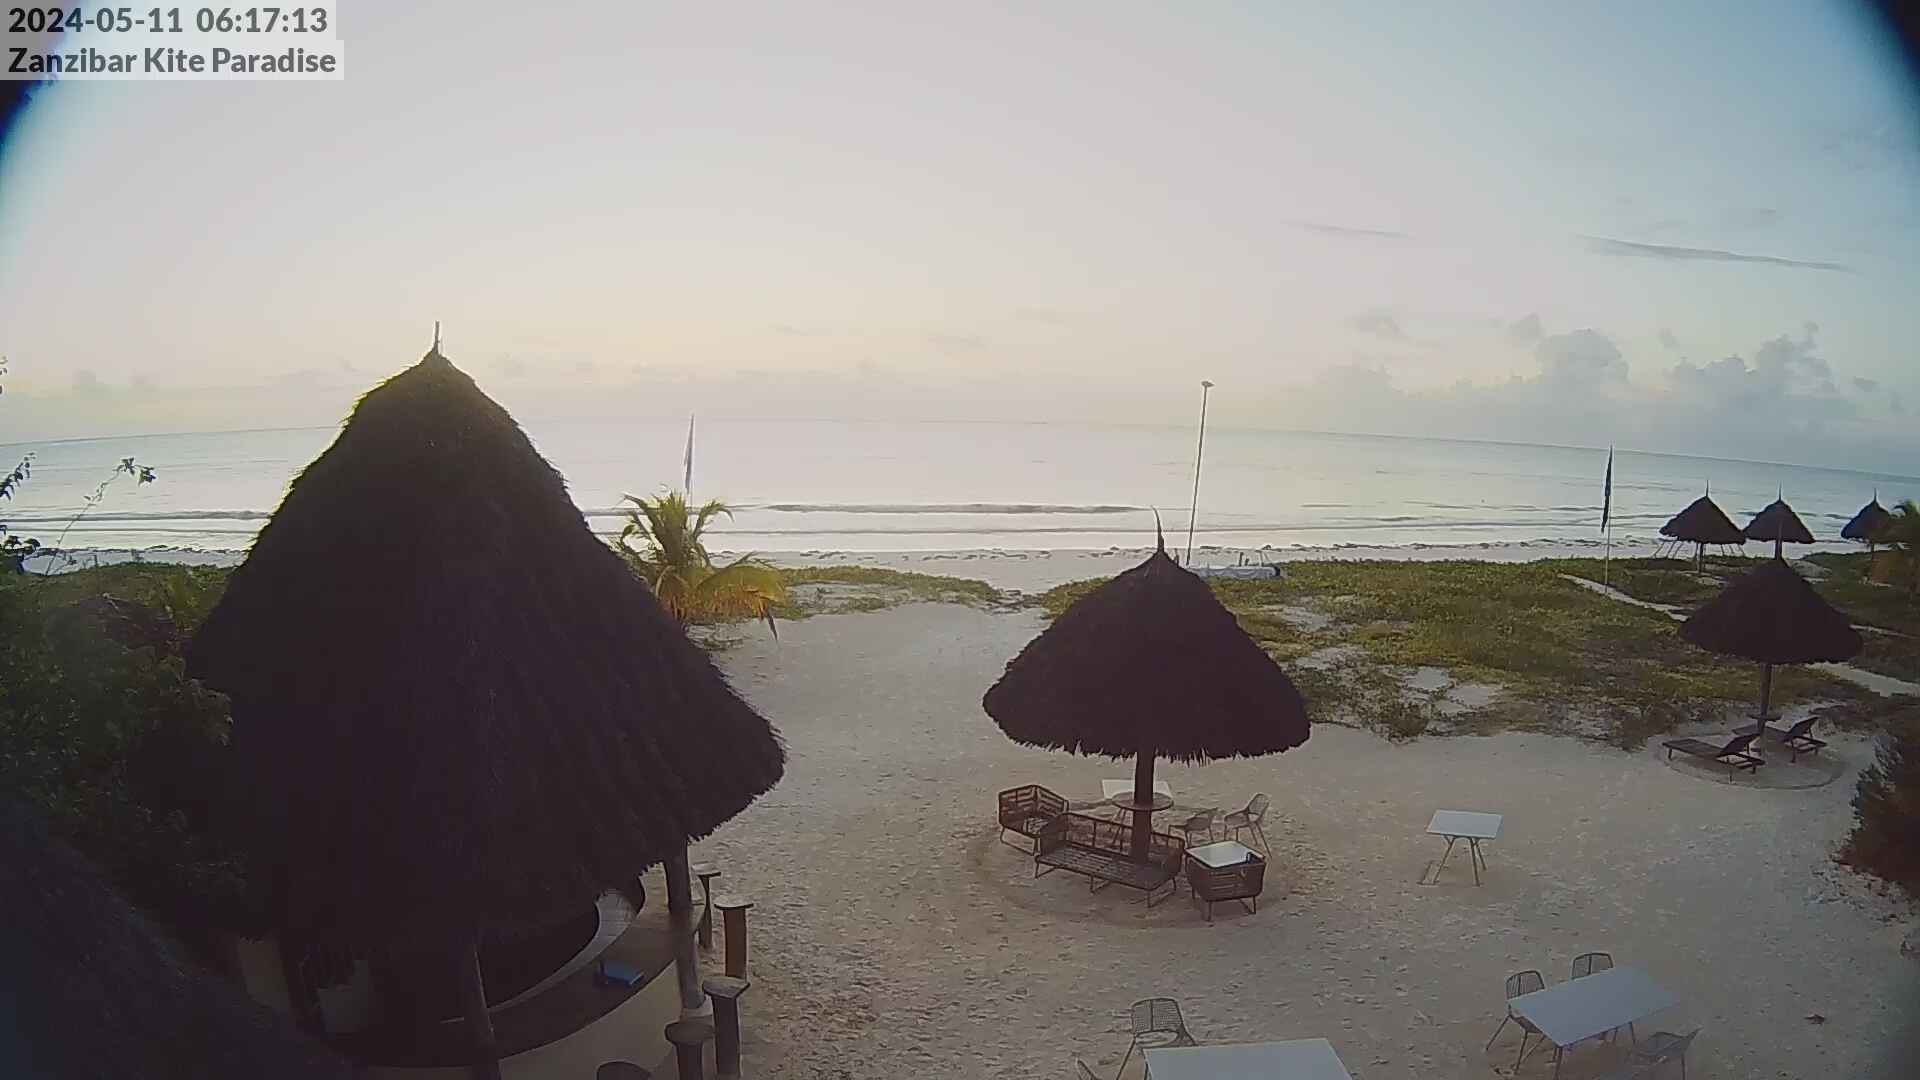 Paje Beach (Sansibar) Tir. 06:17